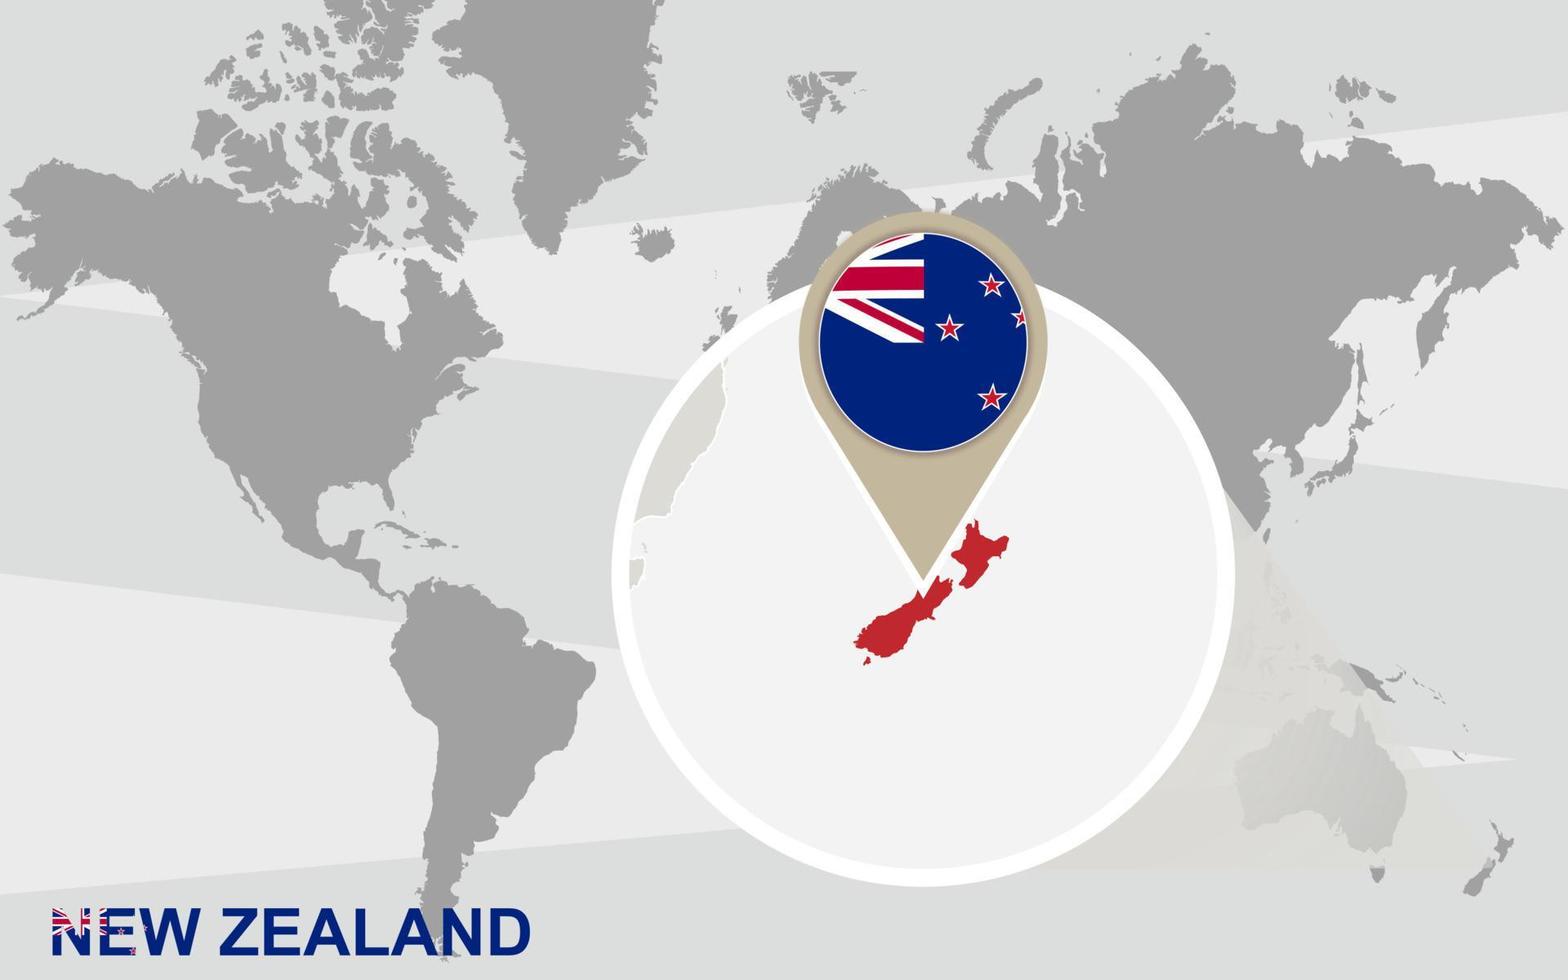 mapa-múndi com a nova zelândia ampliada vetor